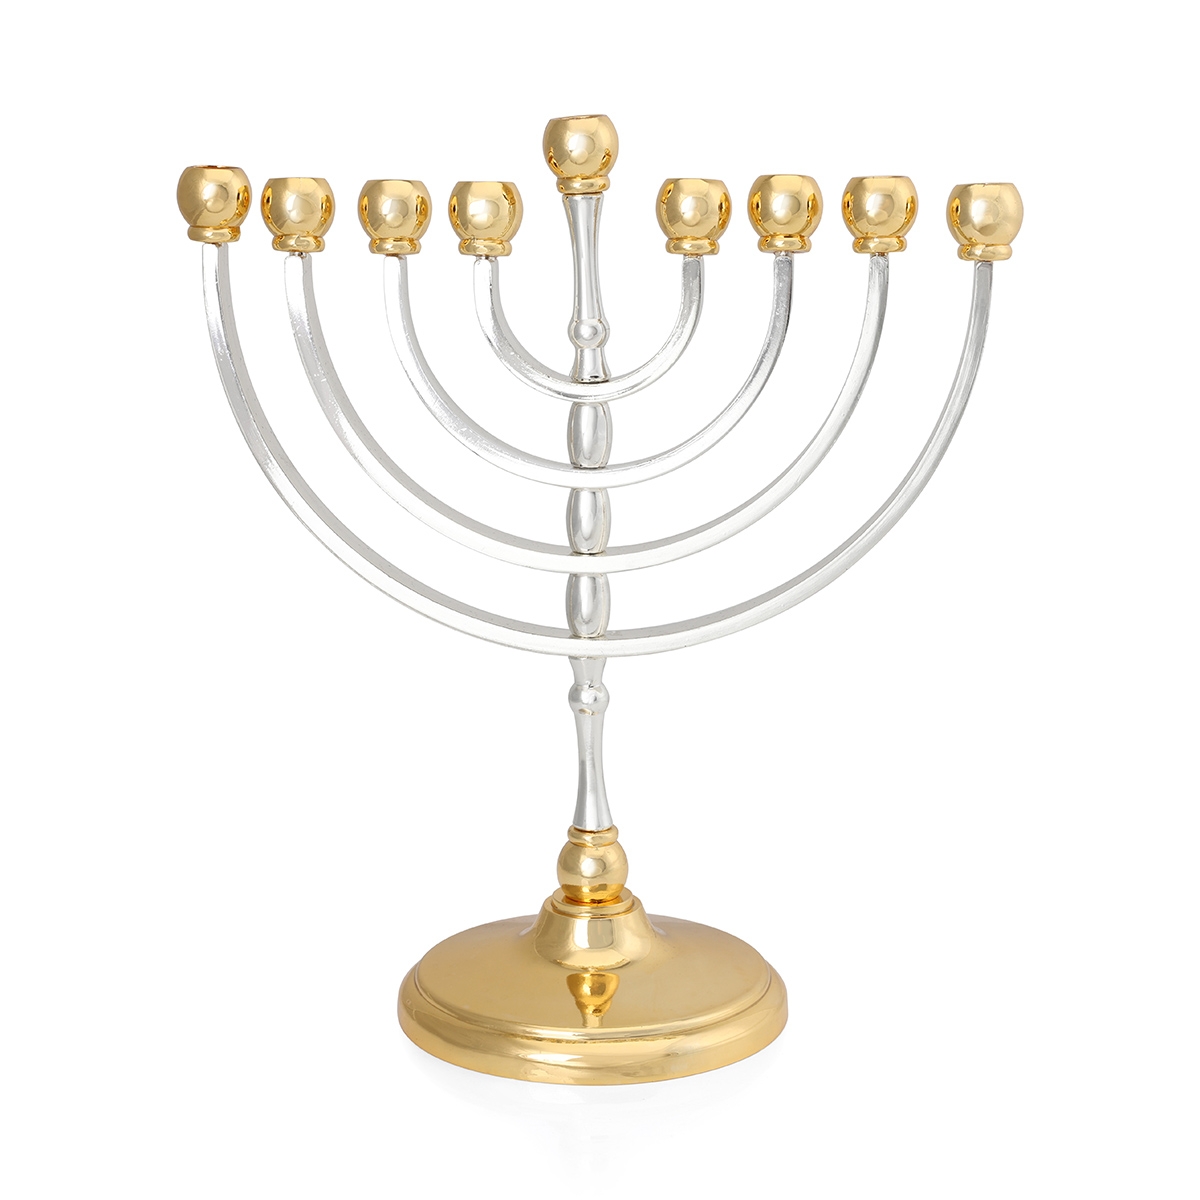 Kinetic Silver and Gold Plated Round Hanukkah Menorah - 1